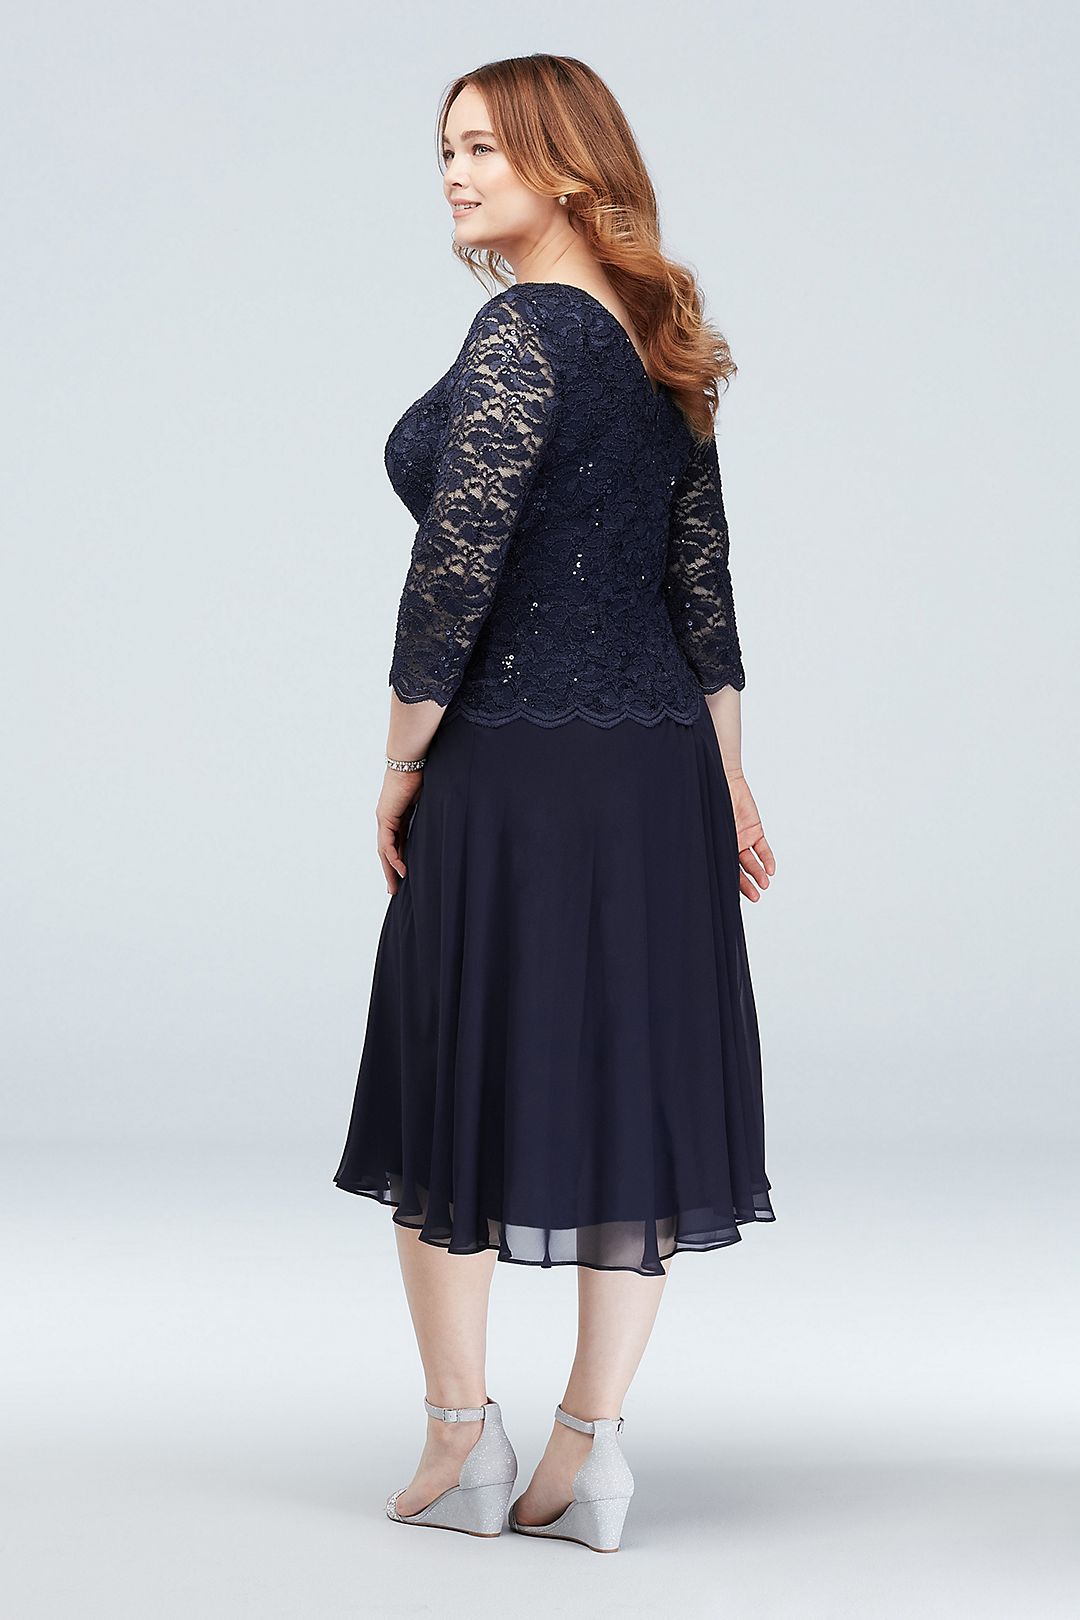 V-Back Scoopneck Plus Size Dress with 3/4 Sleeves Image 4